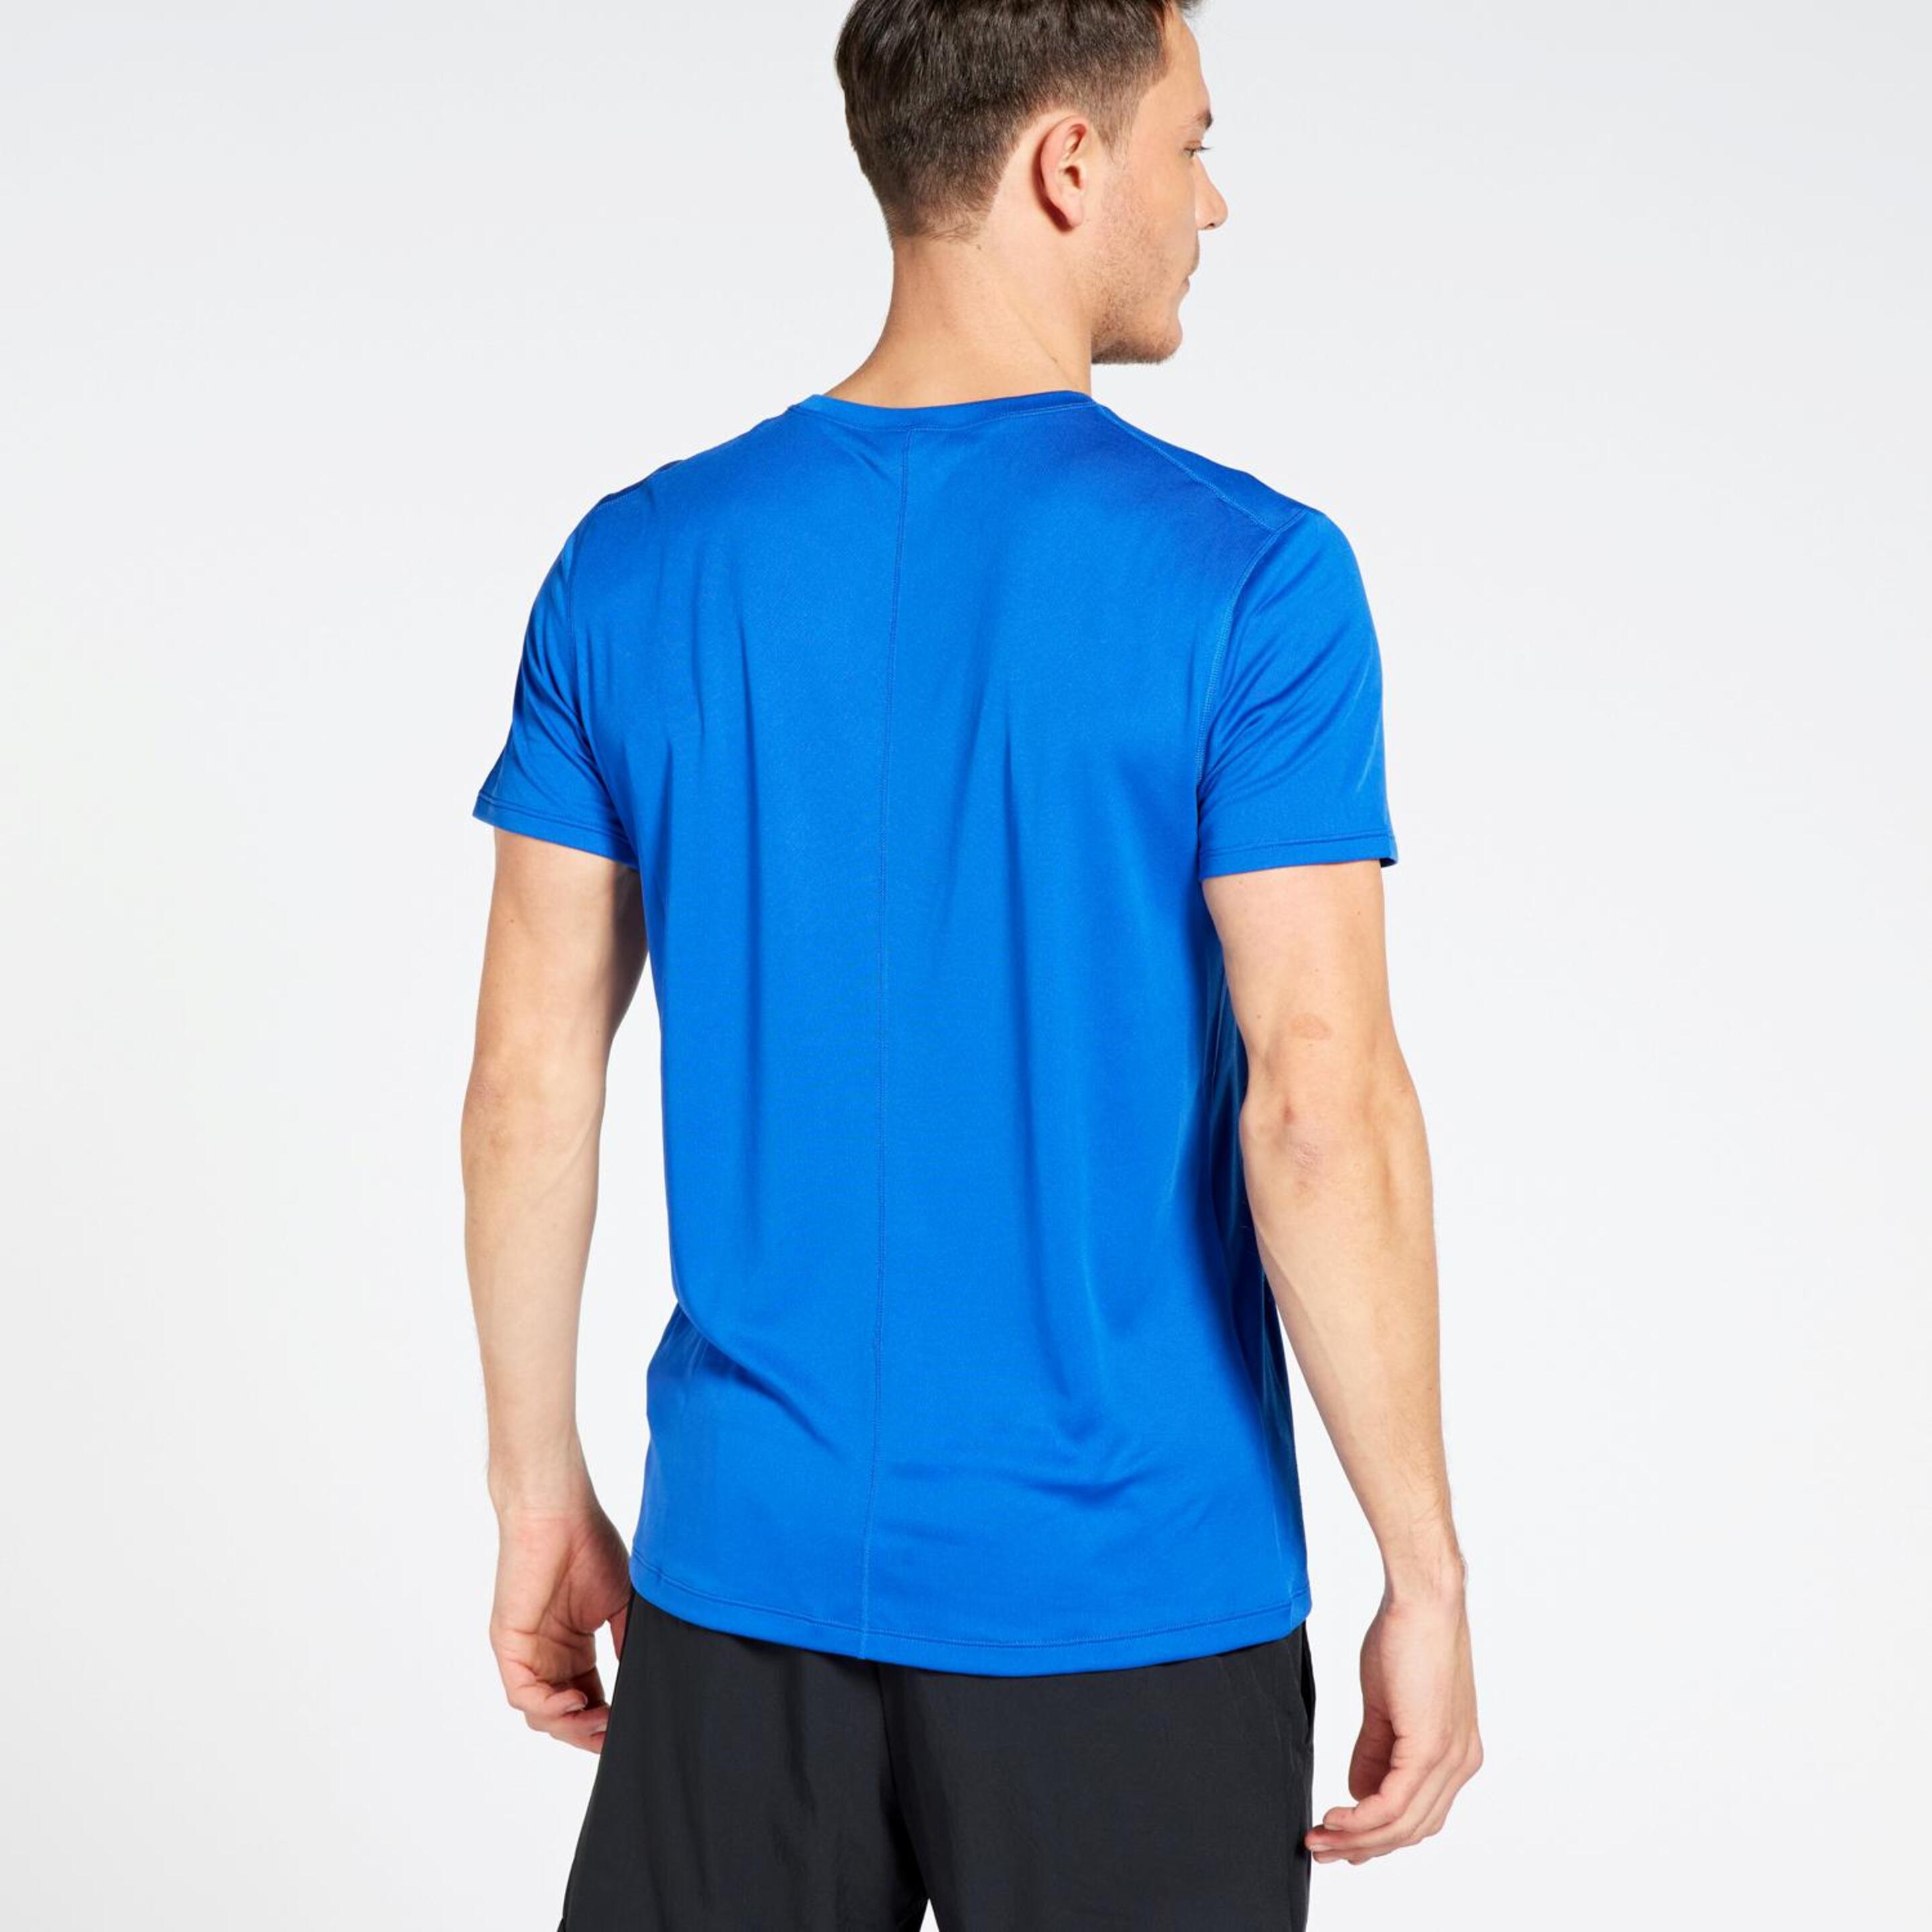 Asics Core - Azul - Camiseta Hombre